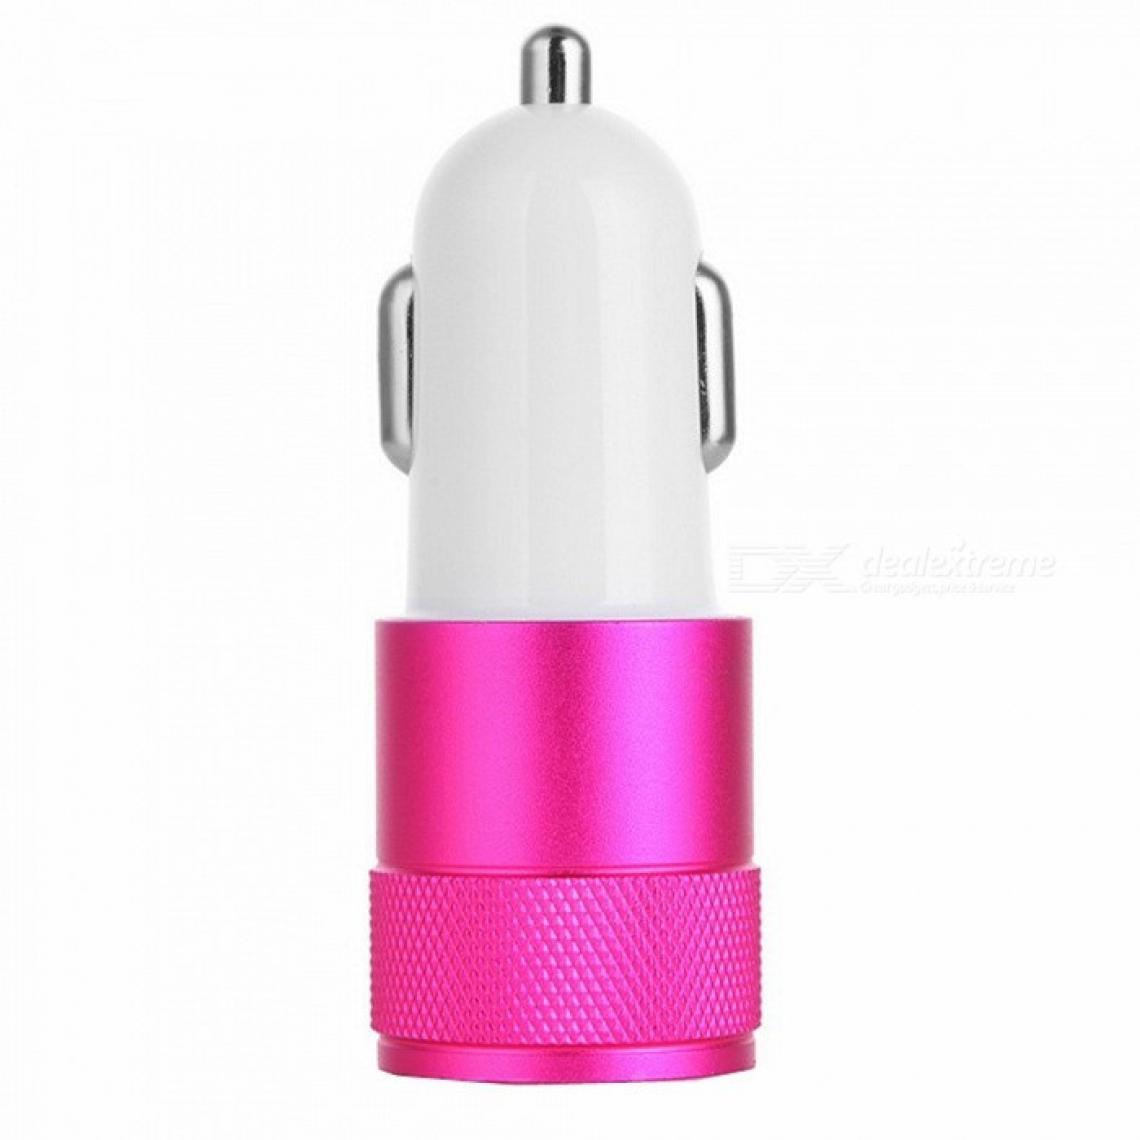 Shot - Double Adaptateur Prise Allume Cigare USB pour "WIKO Y81" Smartphone 2 Ports Voiture Chargeur Couleurs (ROSE) - Chargeur Voiture 12V